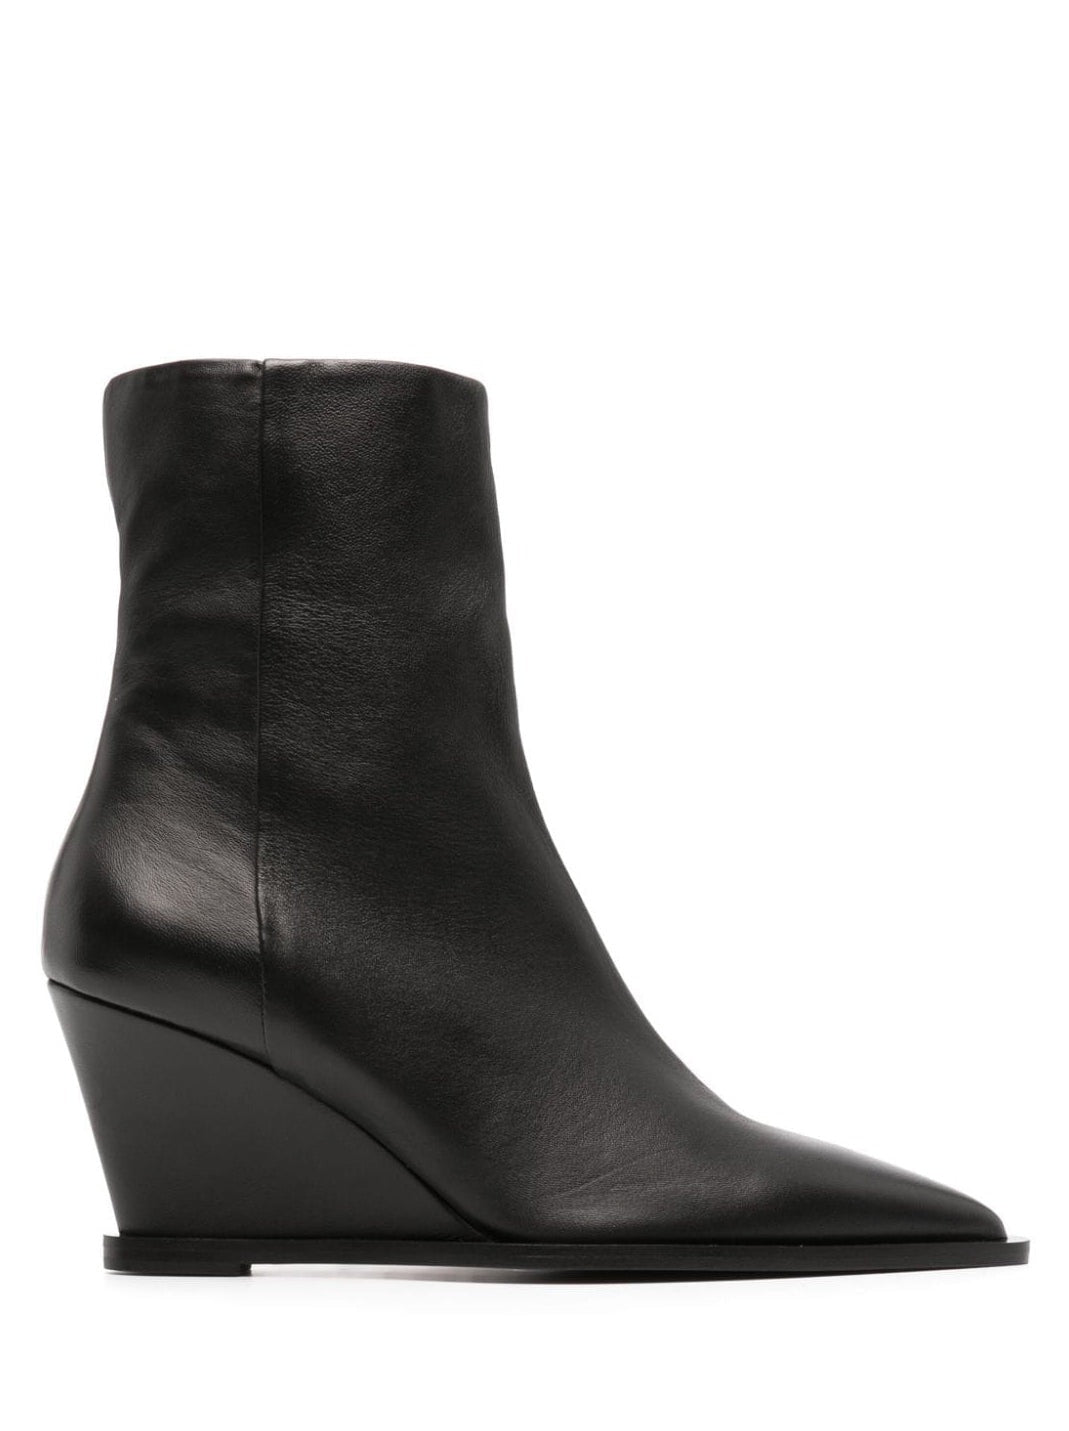 Pratella nappa boots, black